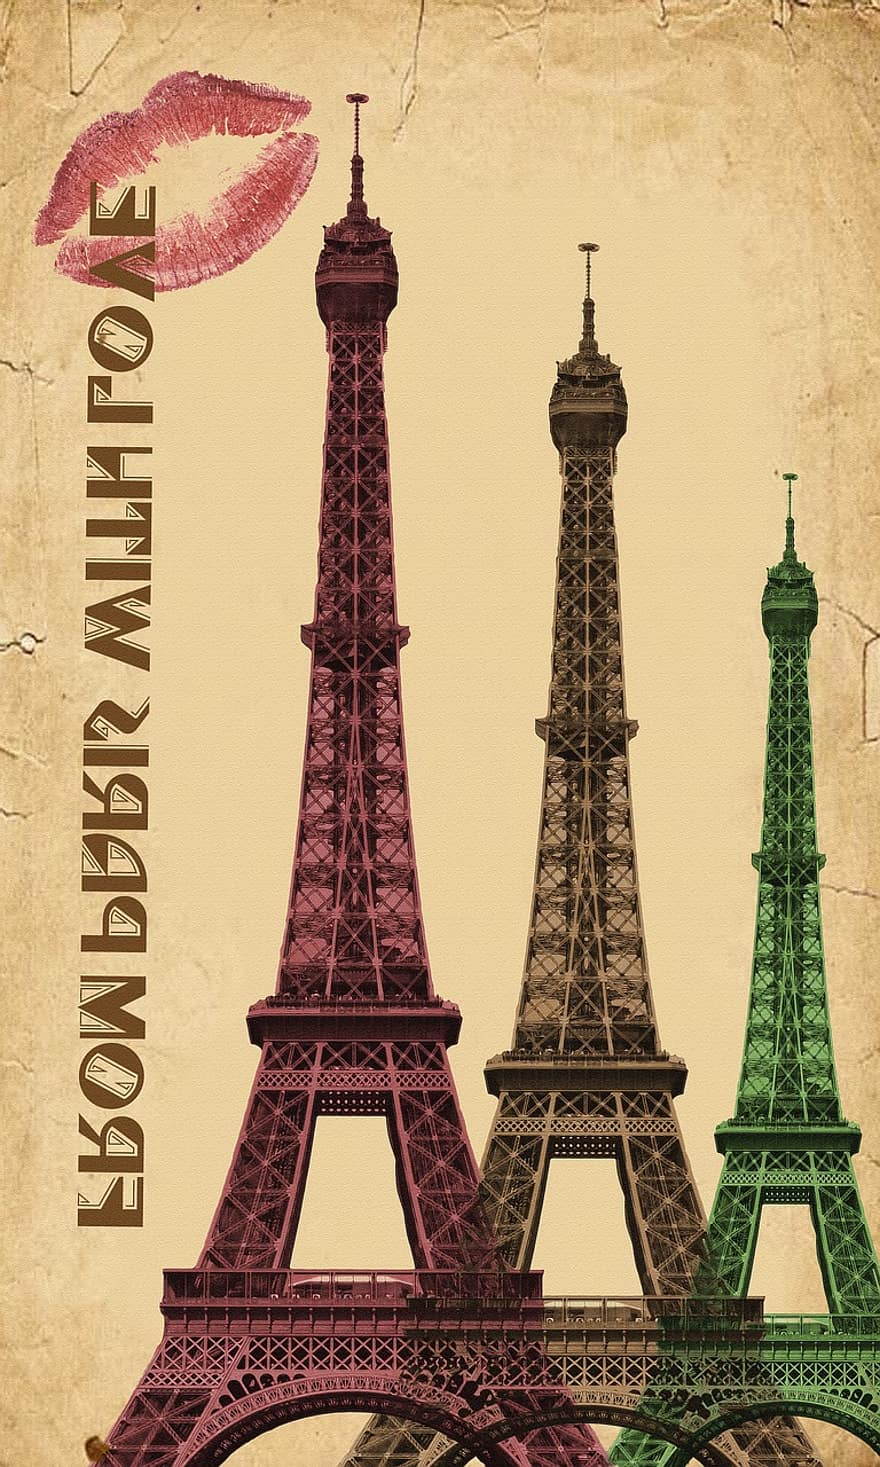 Fransa, Paris, Paris, Fransa, Kent, işaret, seyahat, Avrupa, mimari, Fransızca, kule, ünlü